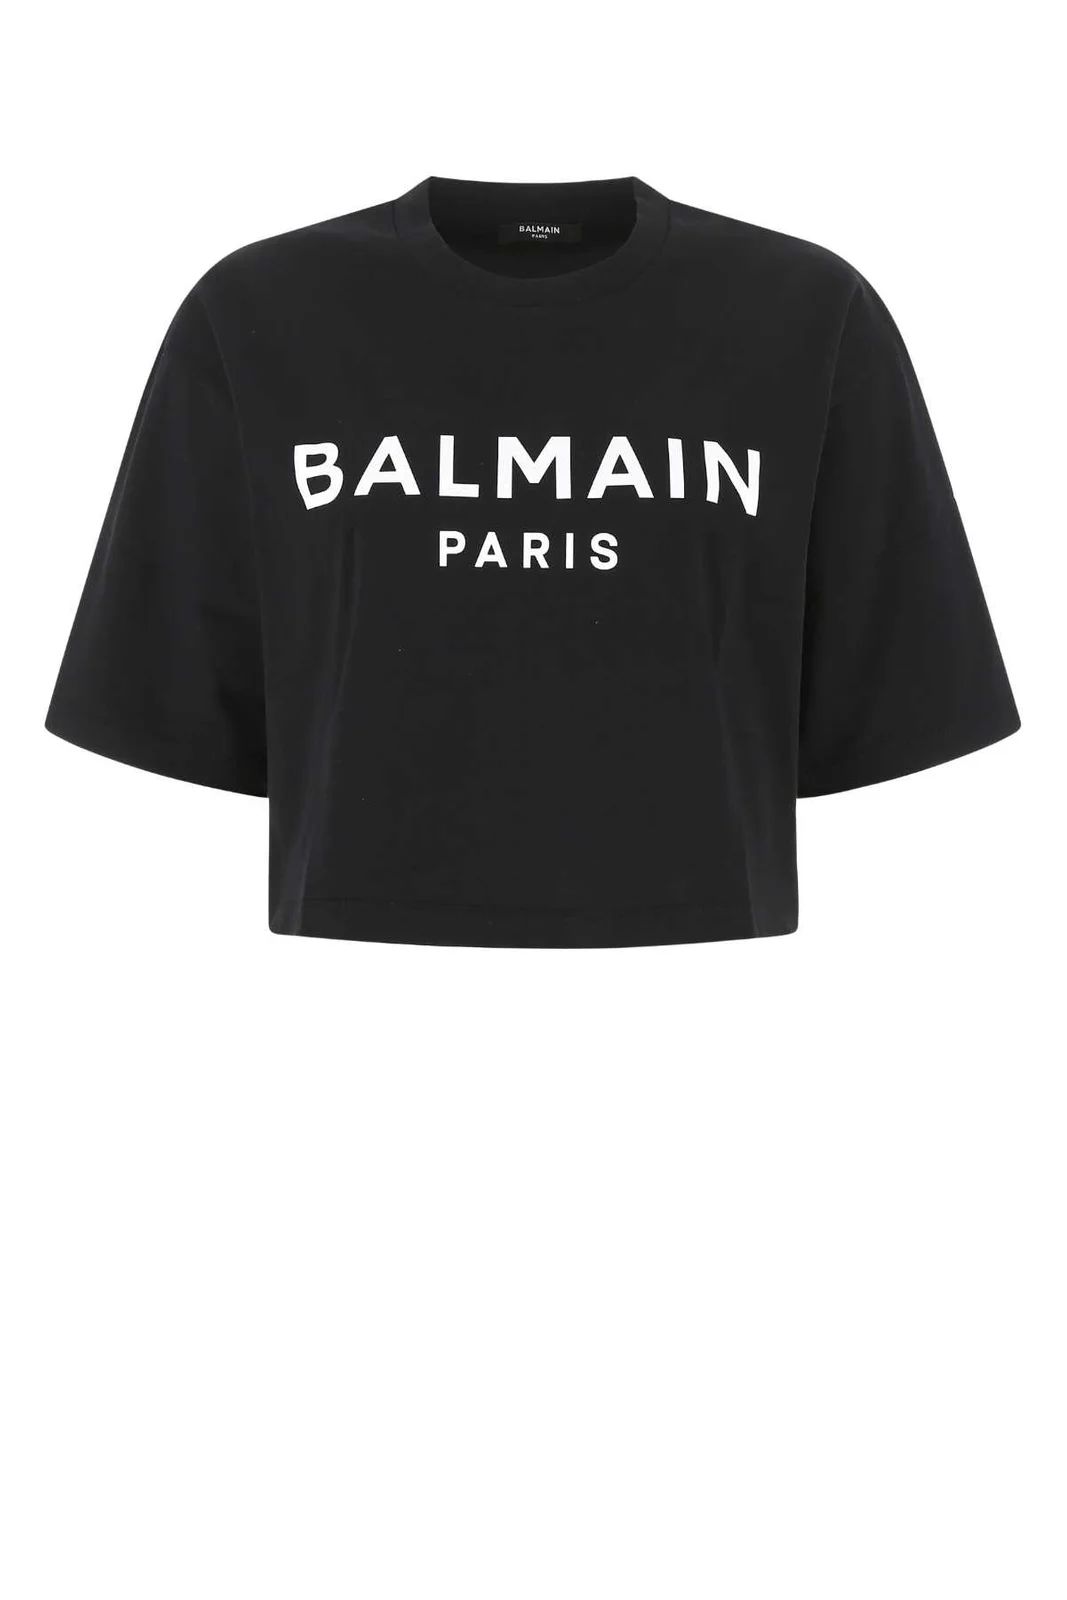 Balmain Logo Printed Cropped T-Shirt | Cettire Global